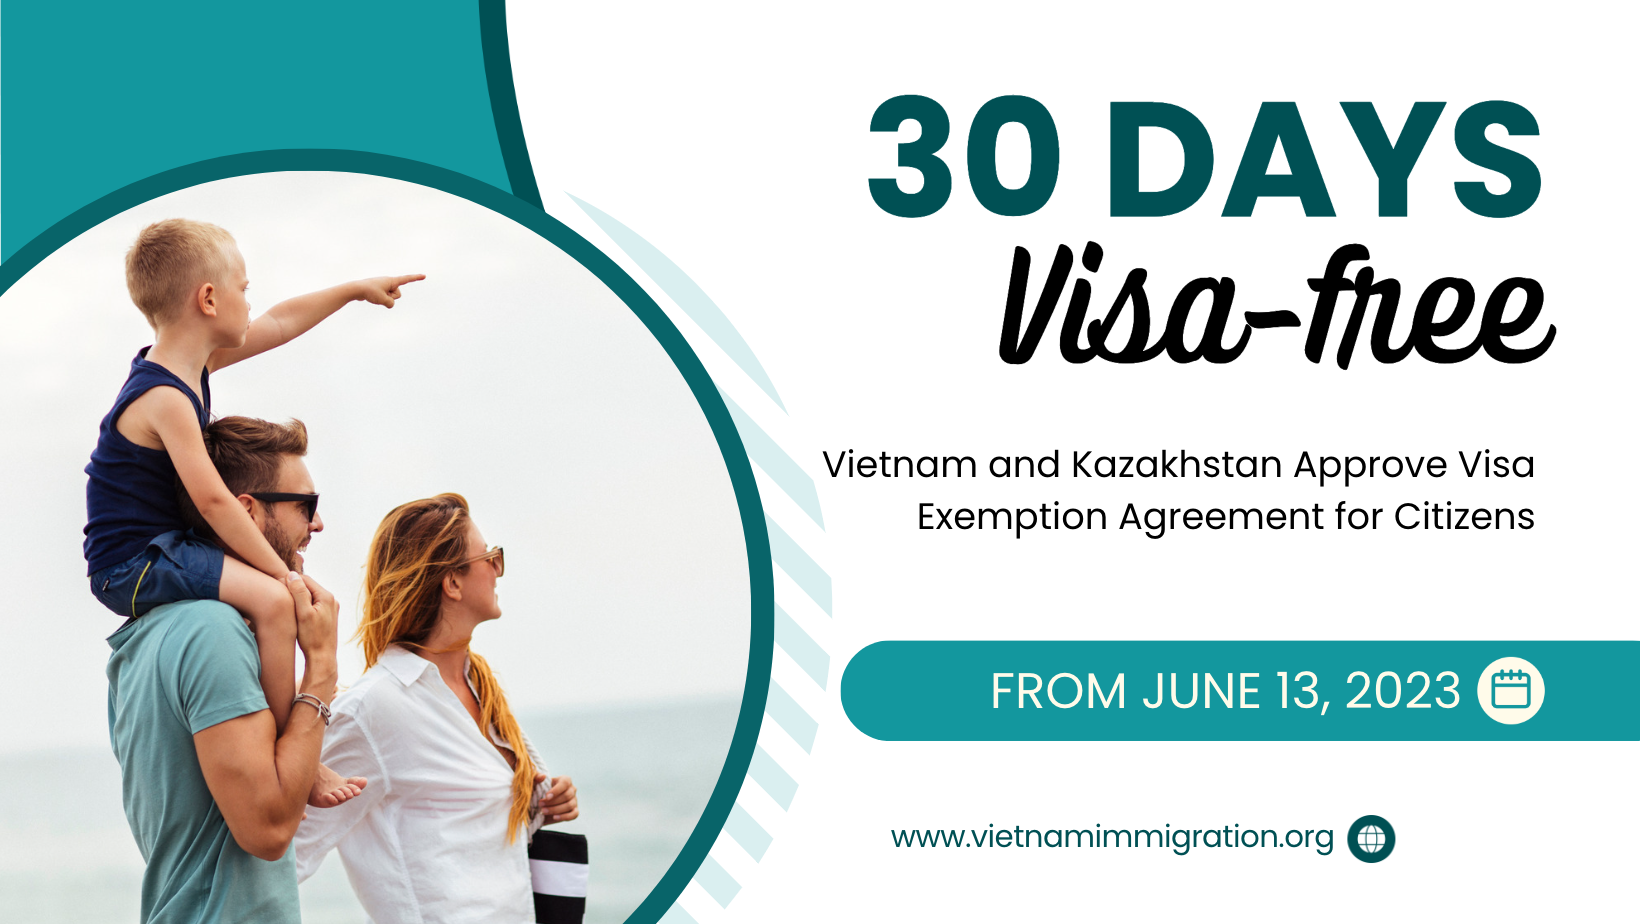 Vietnam and Kazakhstan Approve Visa Exemption Agreement for Citizens